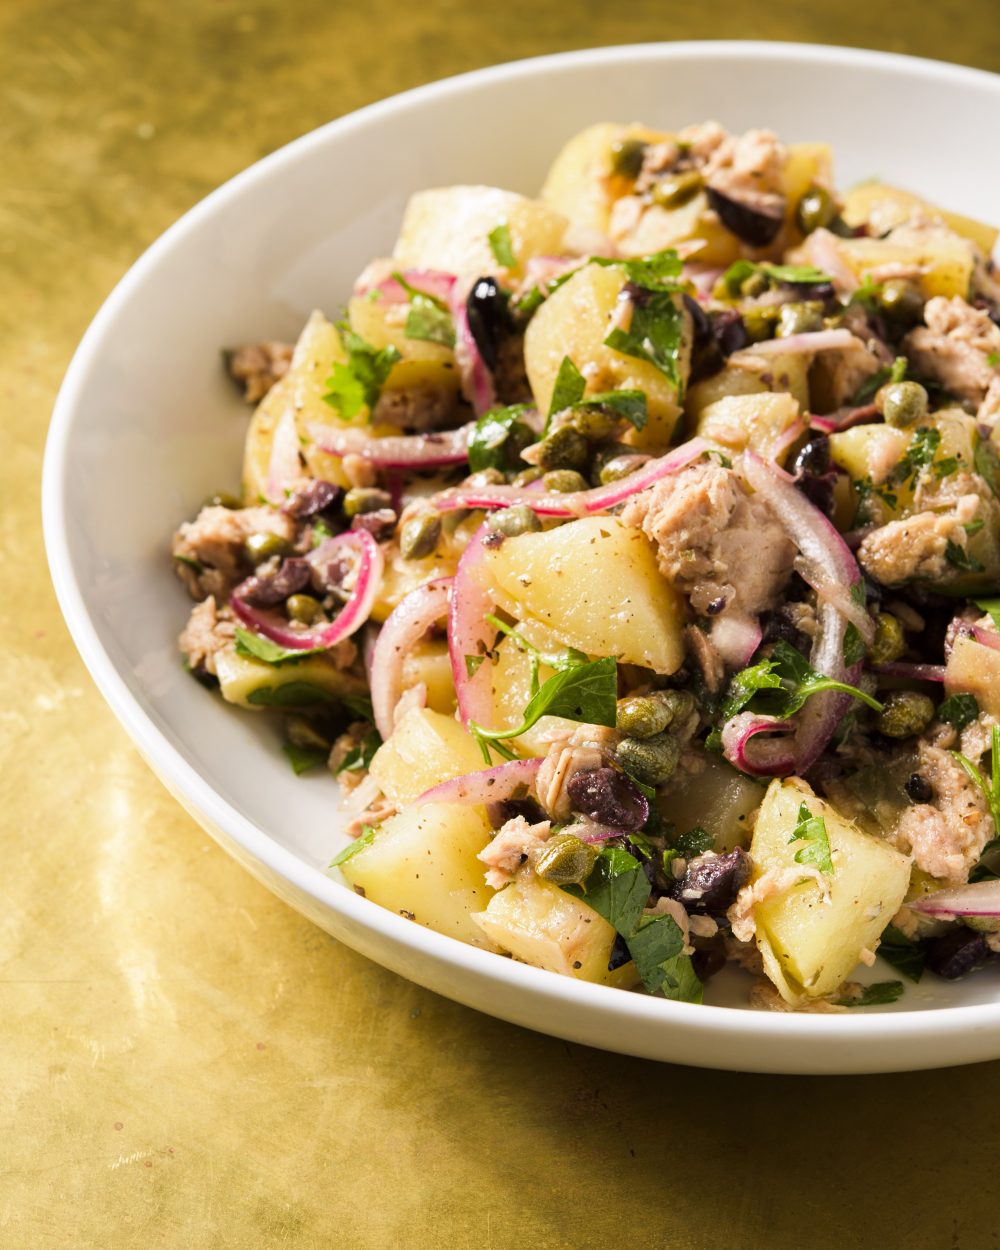 Potato salad capers olives olive oil tuna v